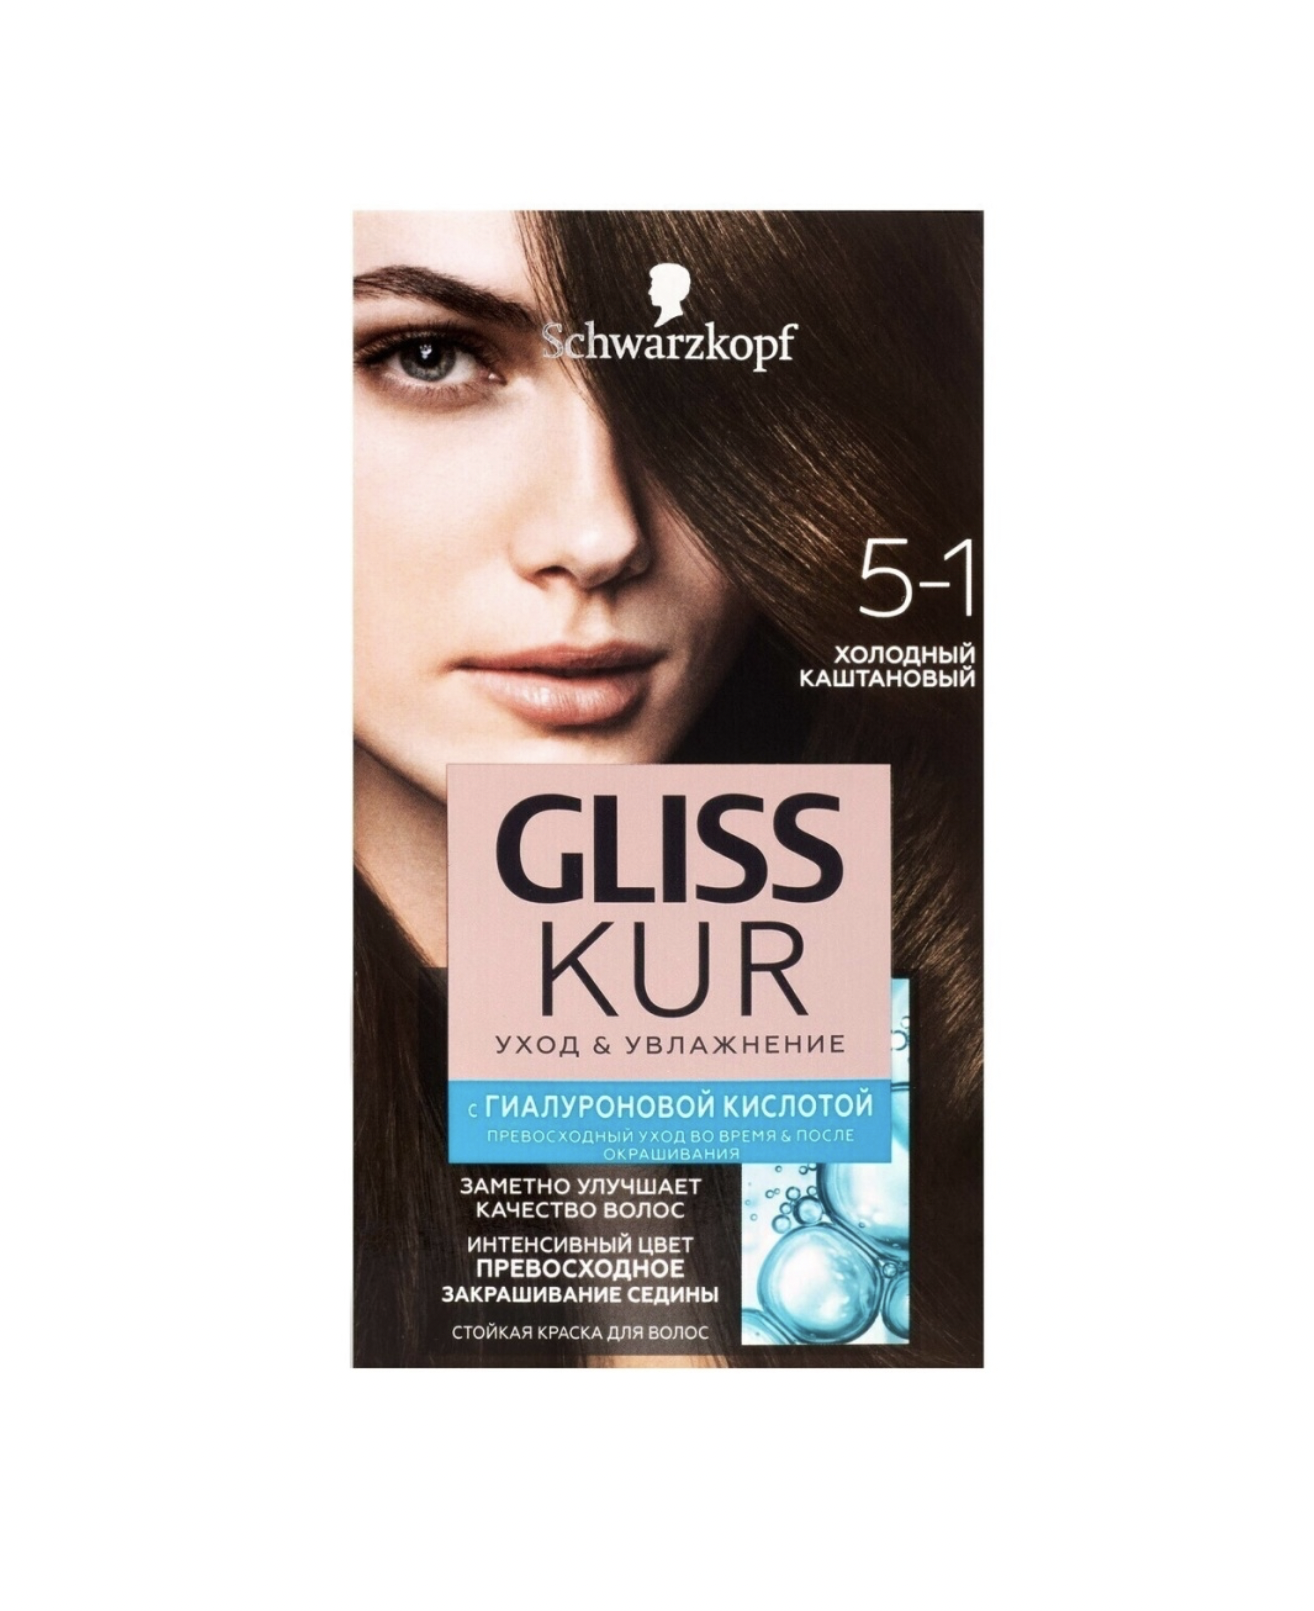 Краска для волос глисс кур. Краска для волос холодный каштан Gliss Kur. Gliss Kur Schwarzkopf краска 4-0. Краска для волос Gliss Kur 5–1. Краска для волос Gliss Kur 5-1 холодный каштановый.